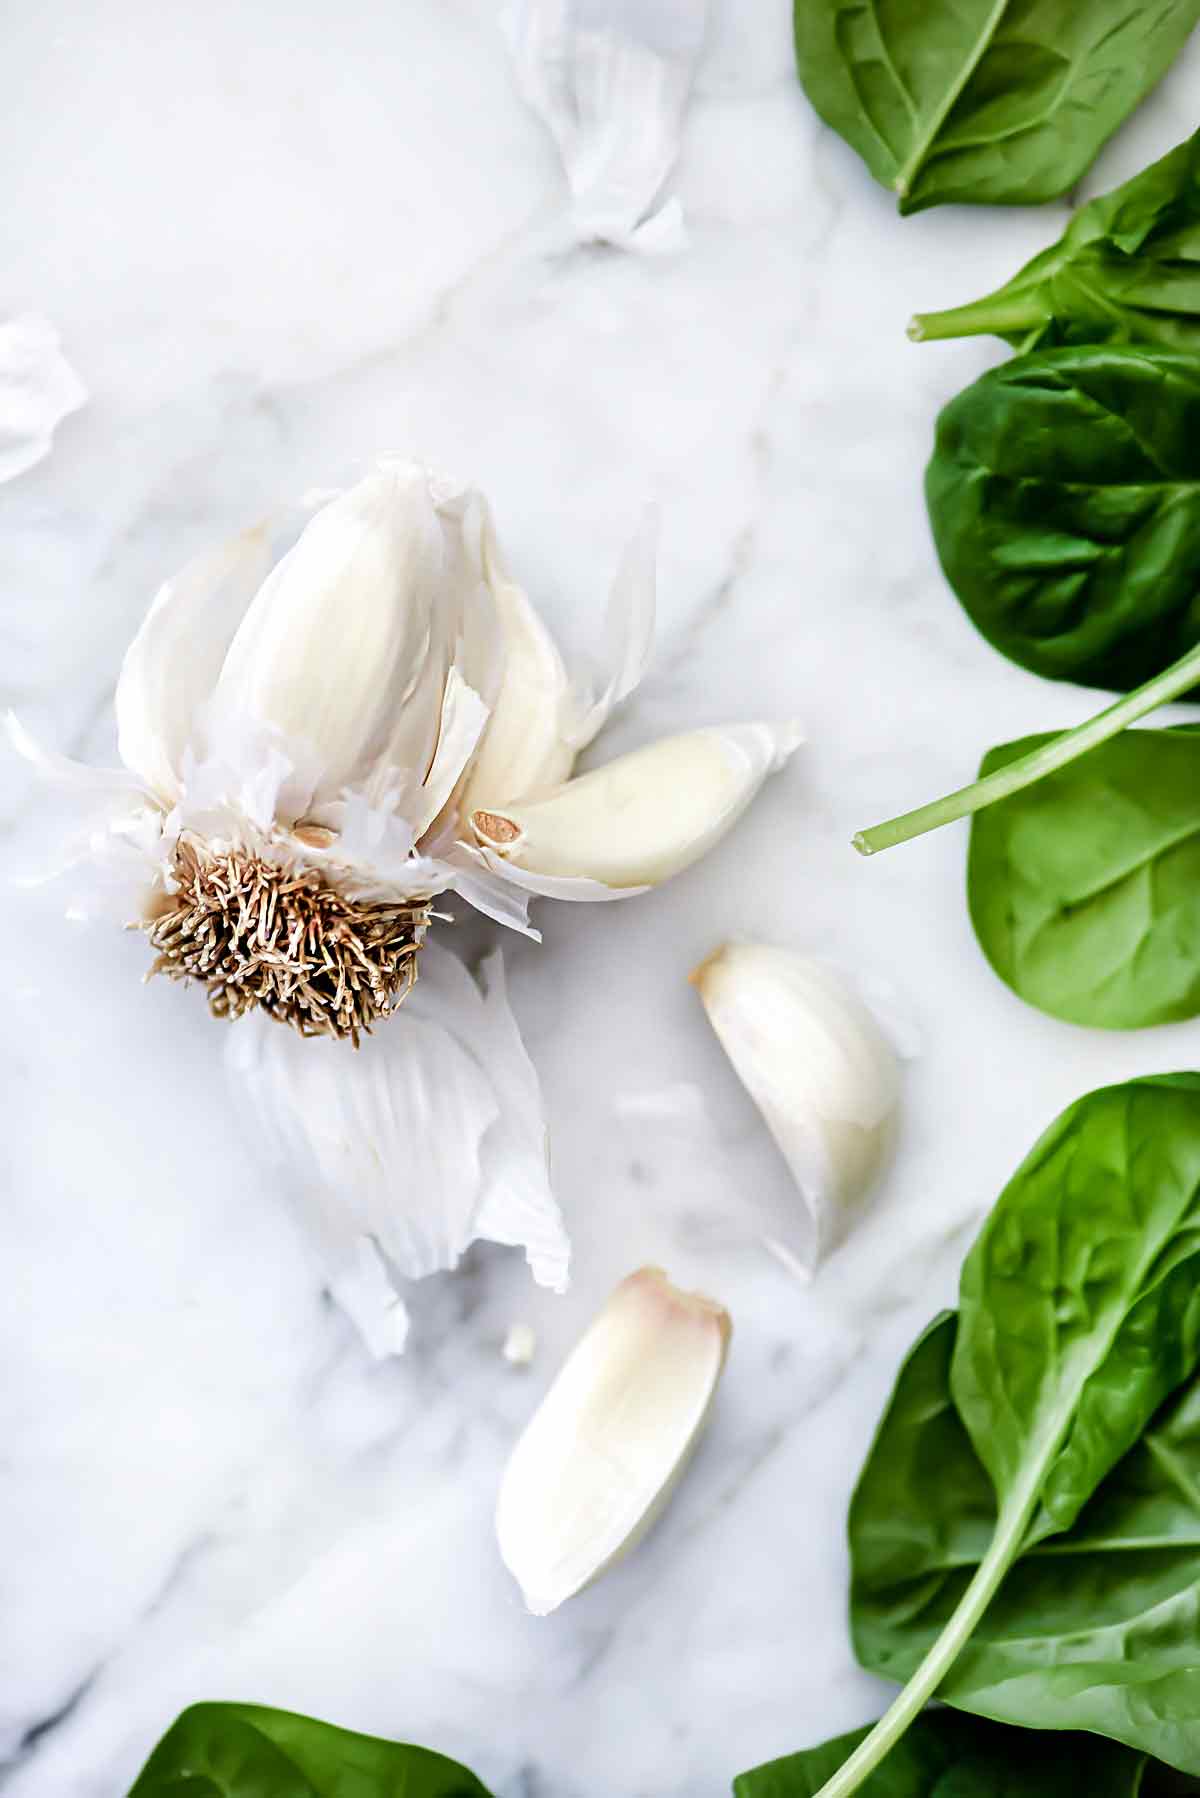 Sautéed Spinach with Garlic foodiecrush.com #recipes #sidedish #saute #spinach #garlic #healthy